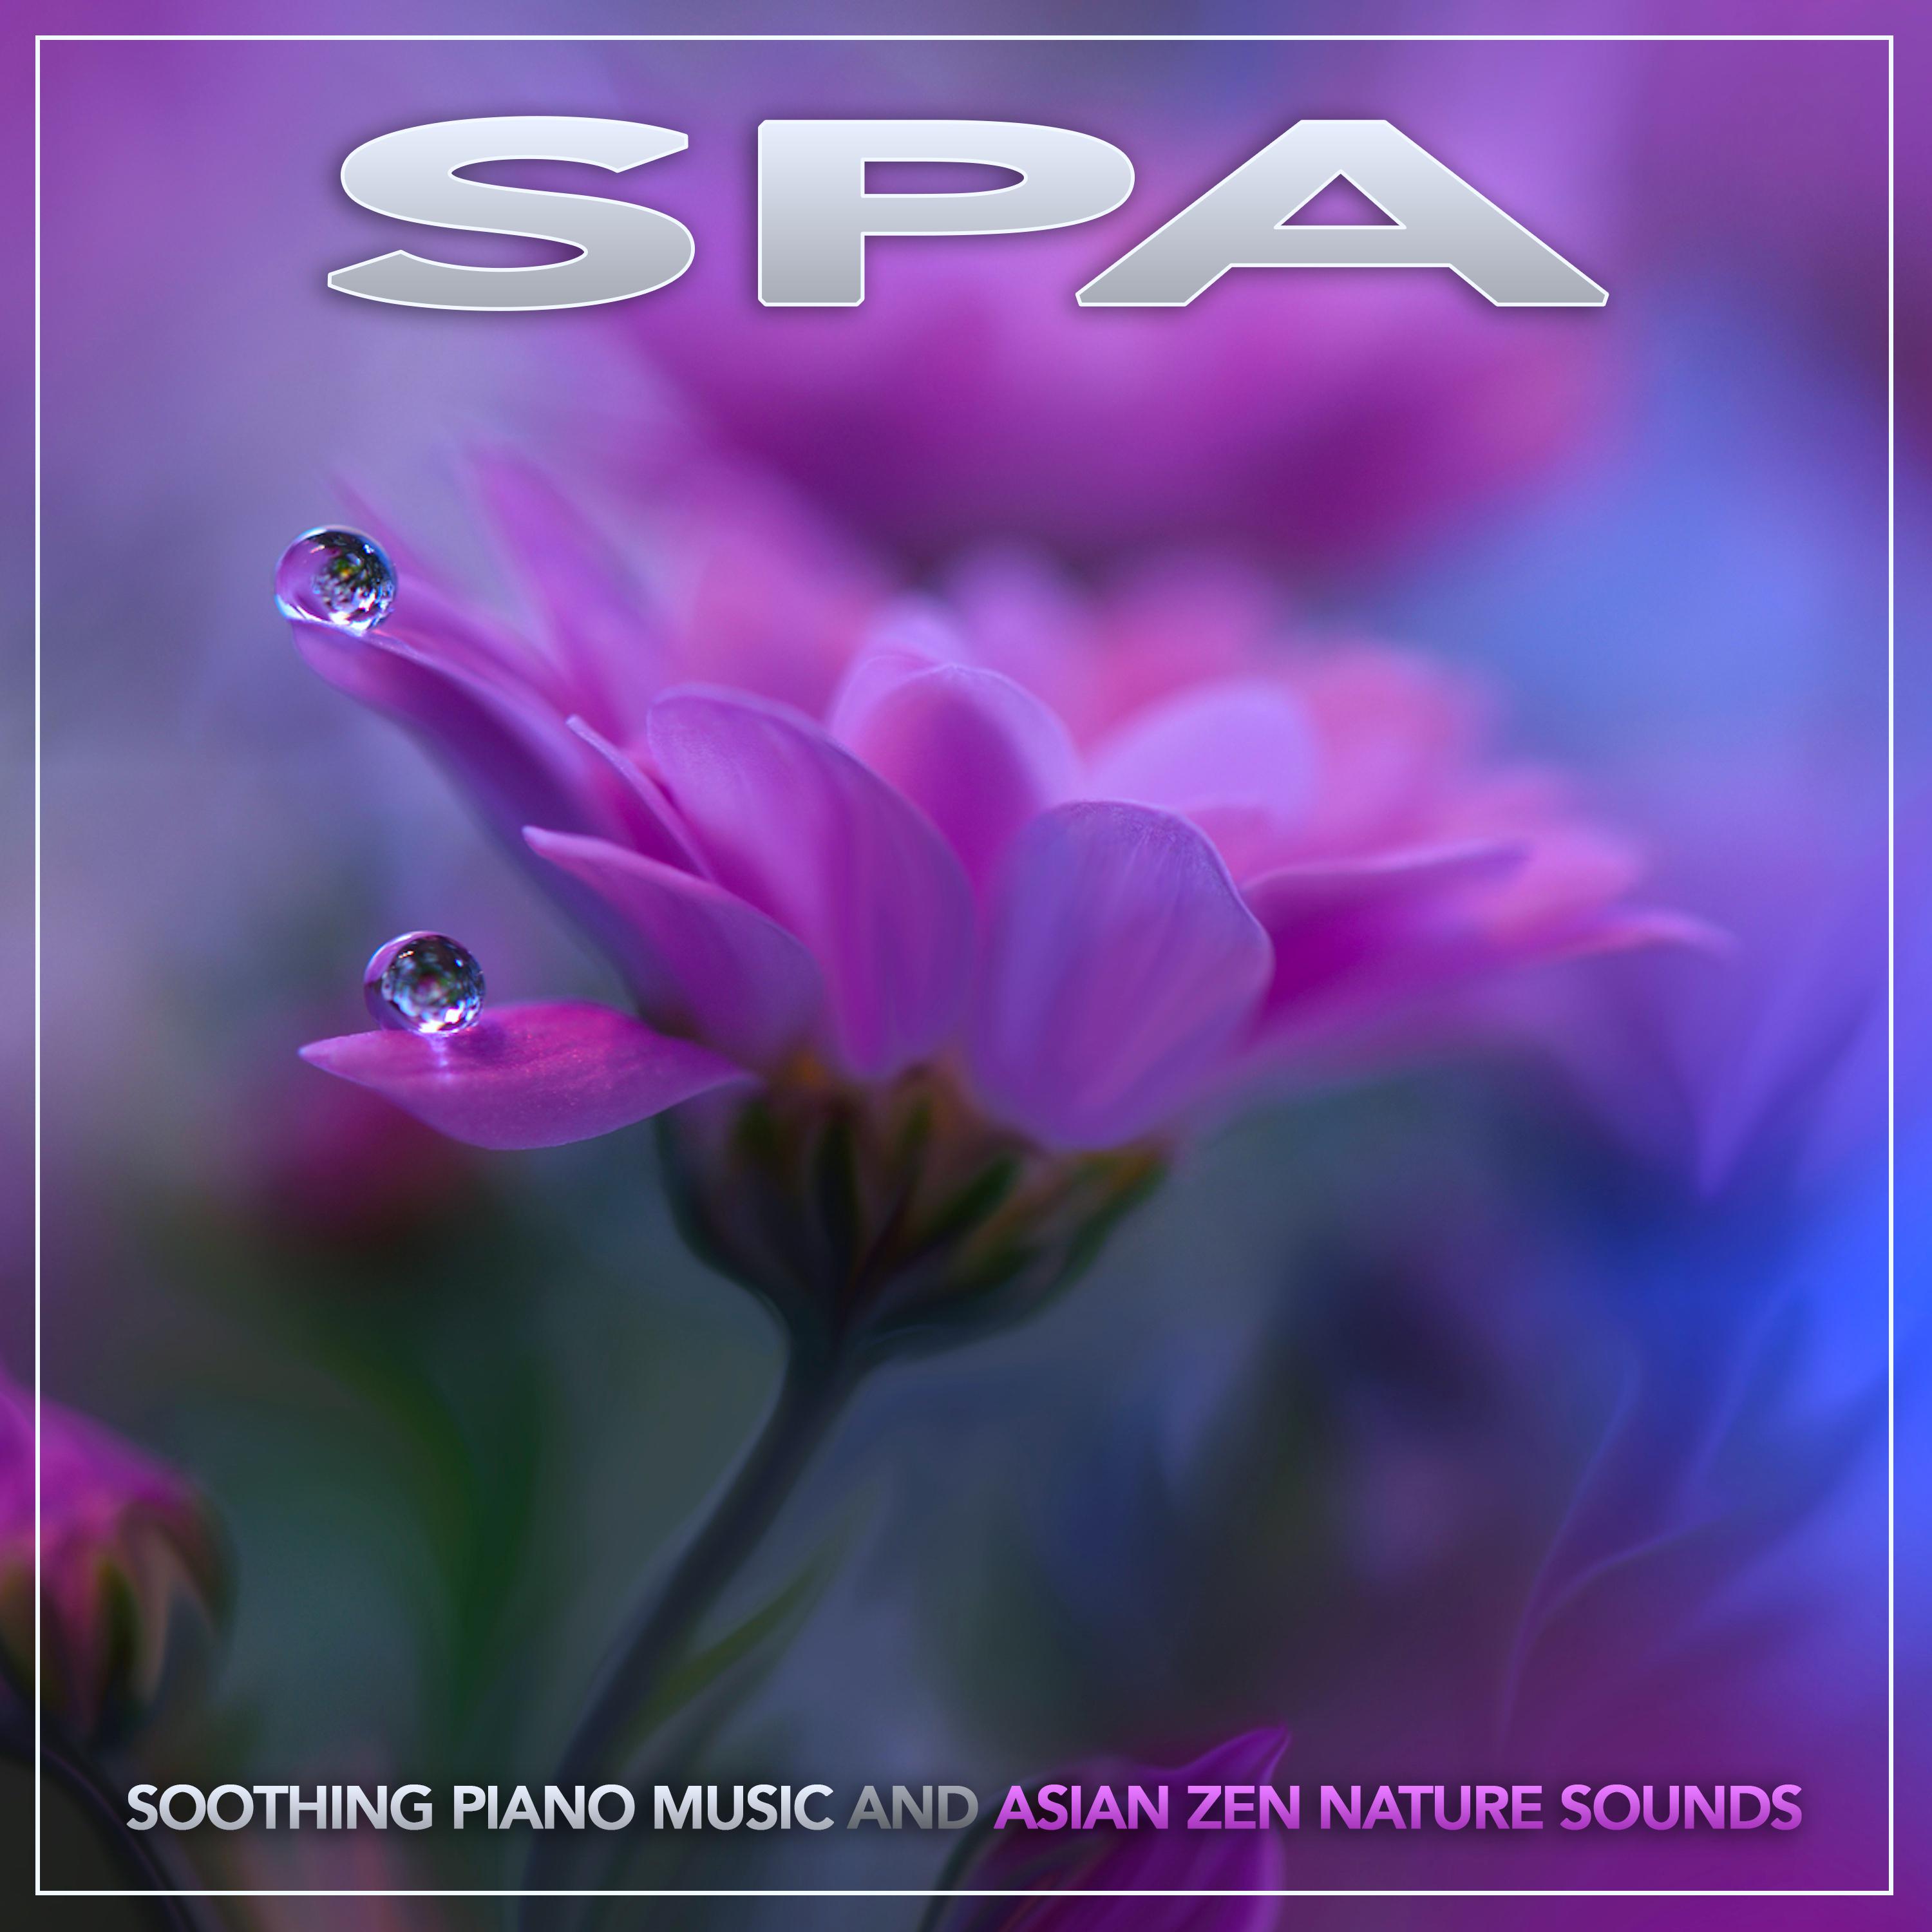 Asian Zen Spa Music Meditation